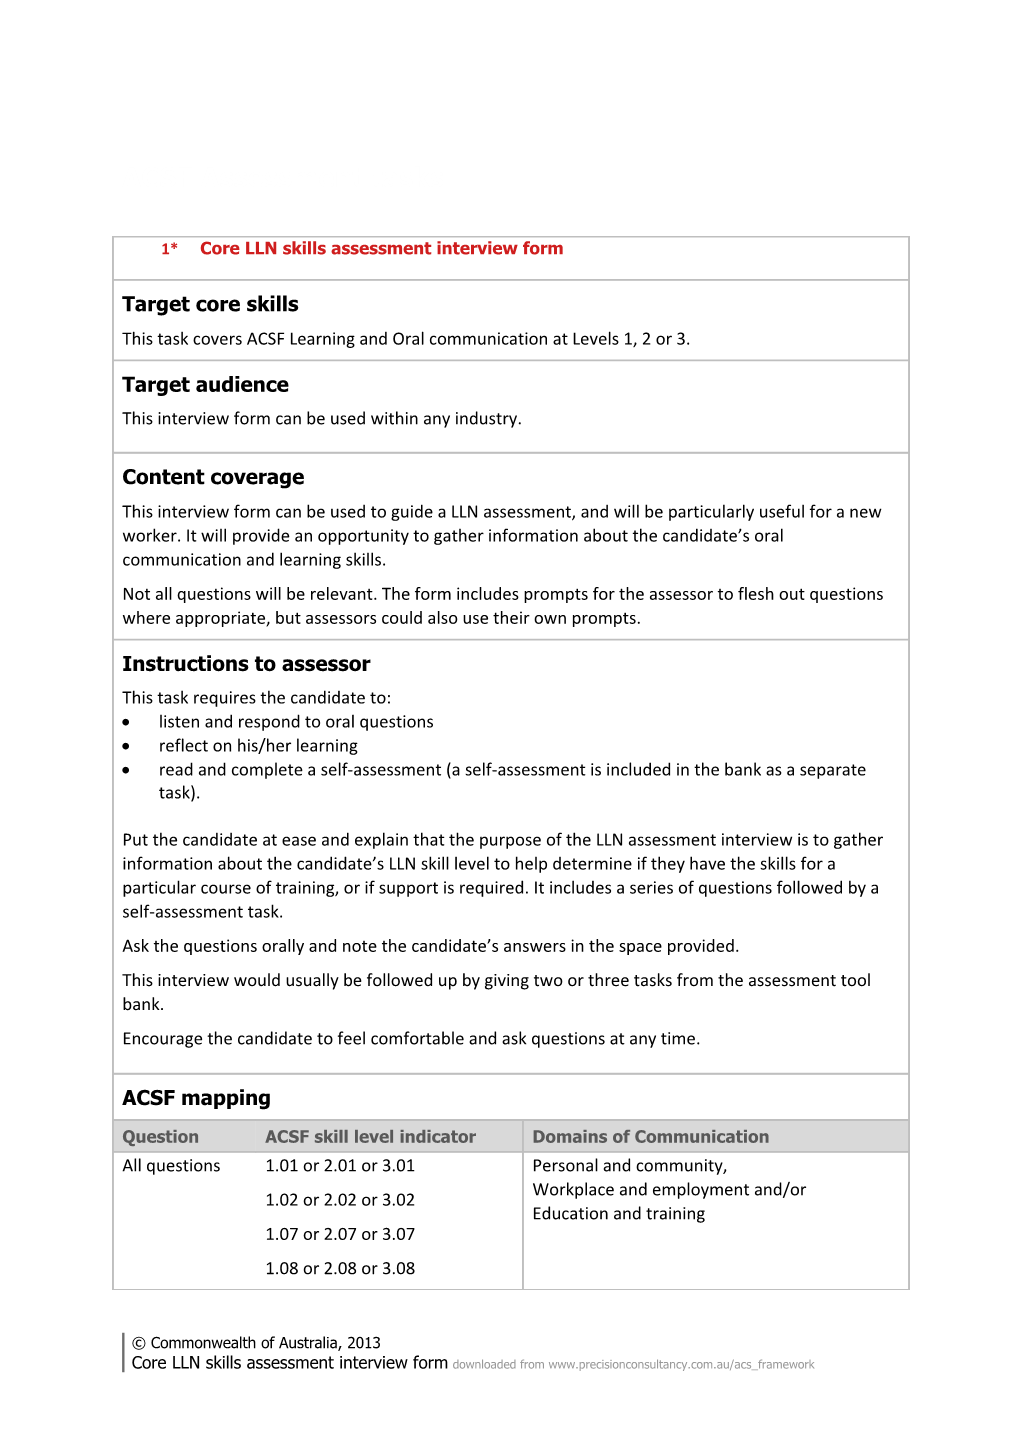 Core LLN Skills Assessment Interview Form